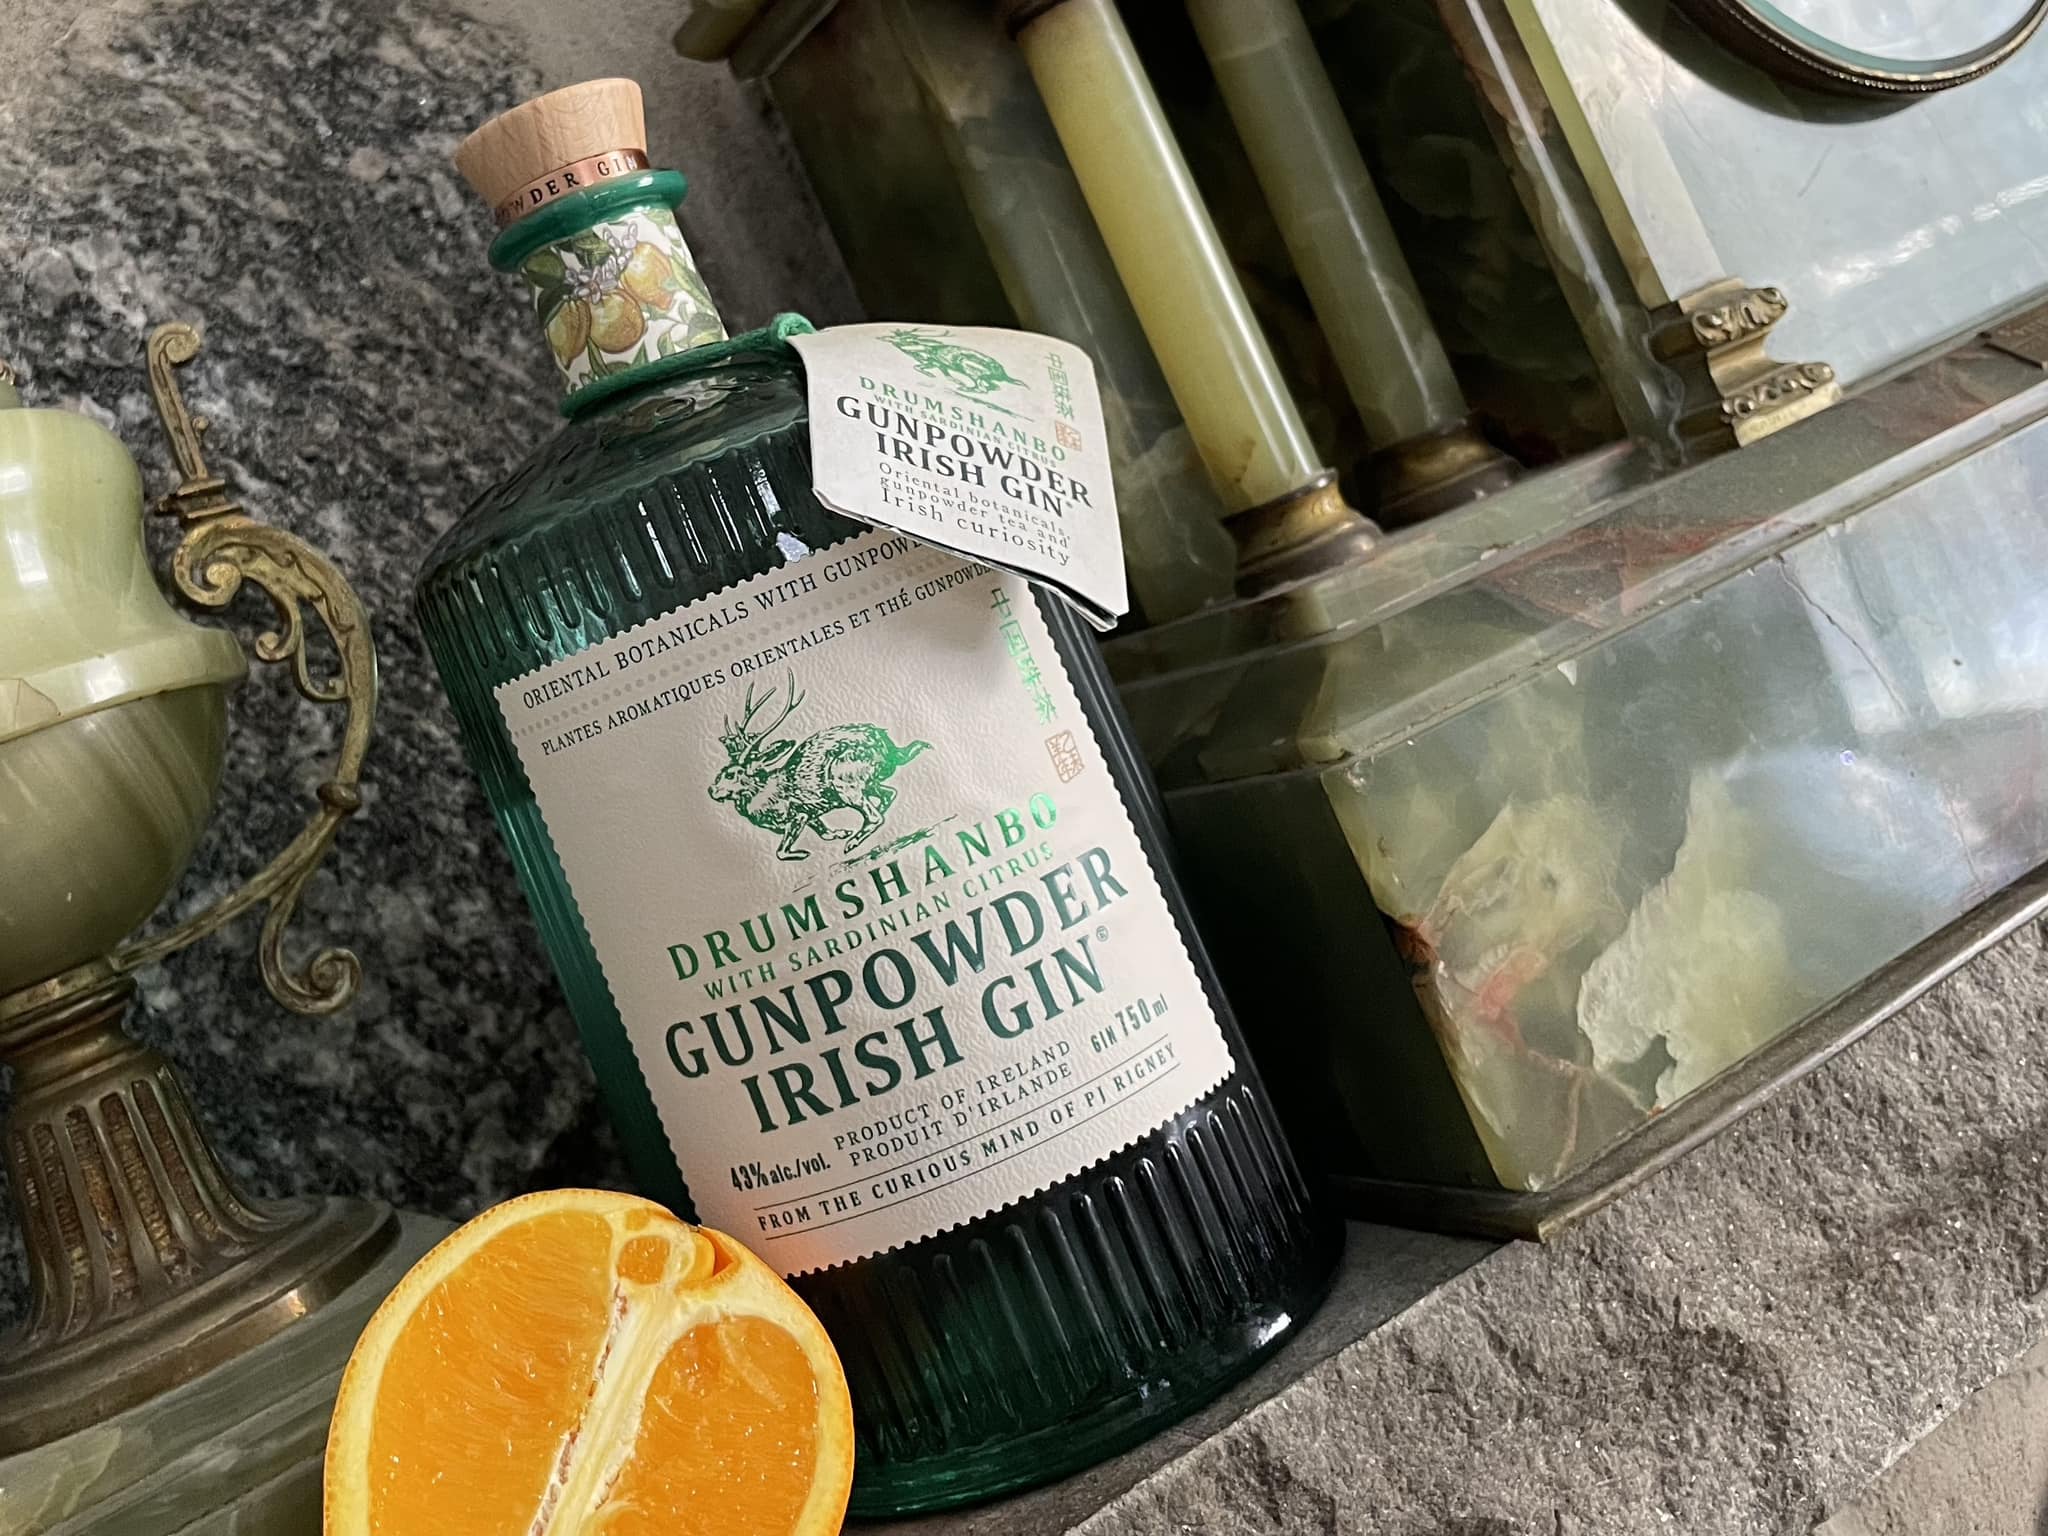 Drumshanbo Gunpowder Sardinian citrus Irish Gin